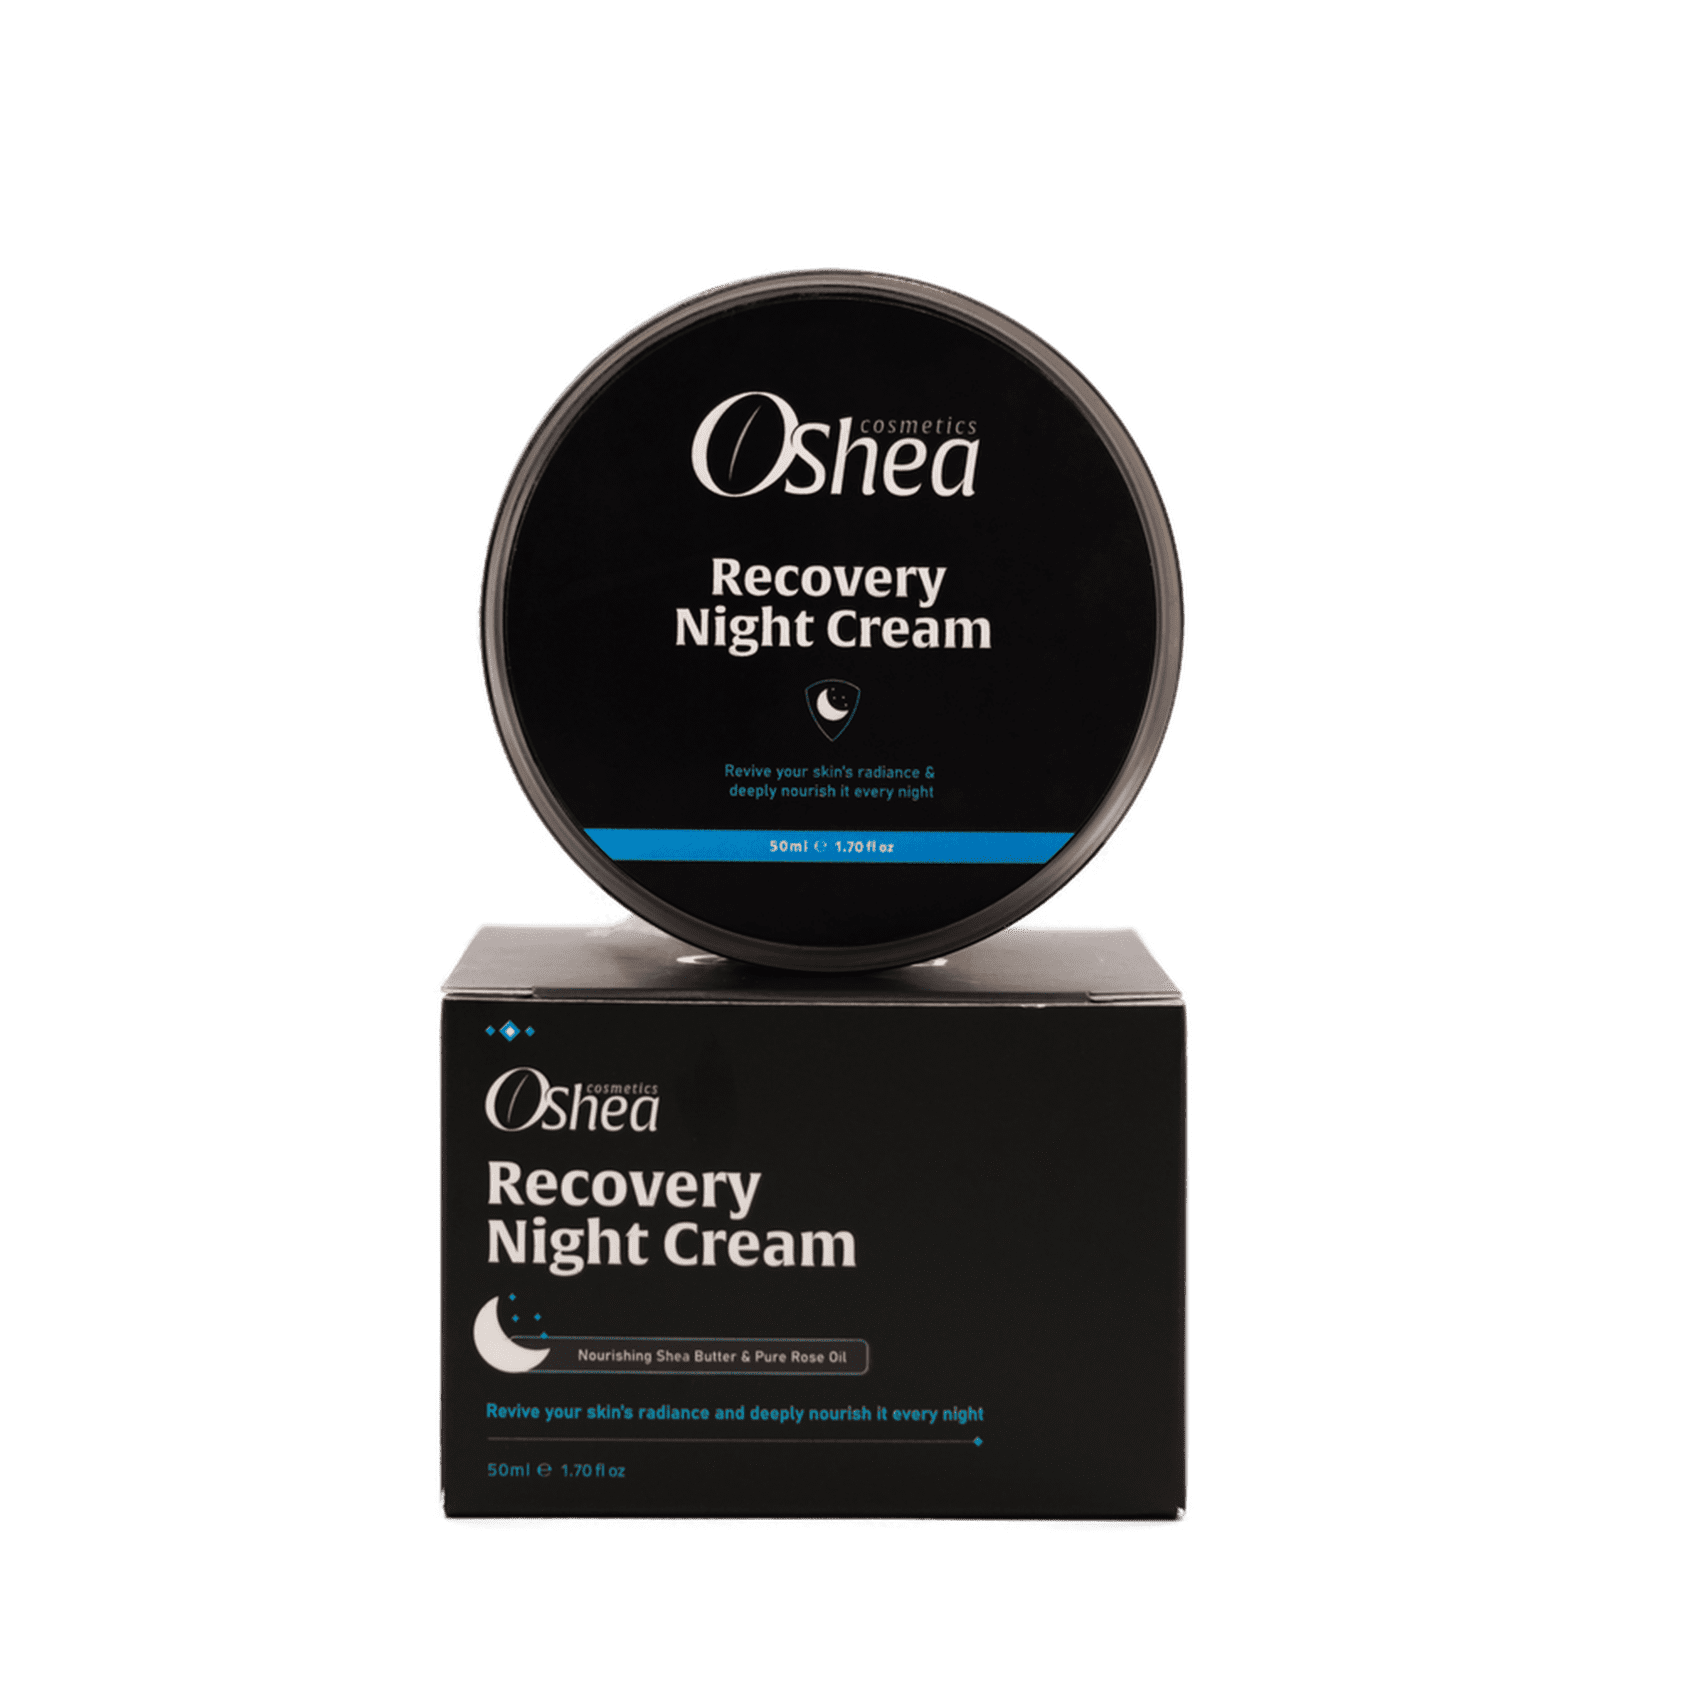 Oshea’s Night Moisturizing Cream… luxurious natural ingredients